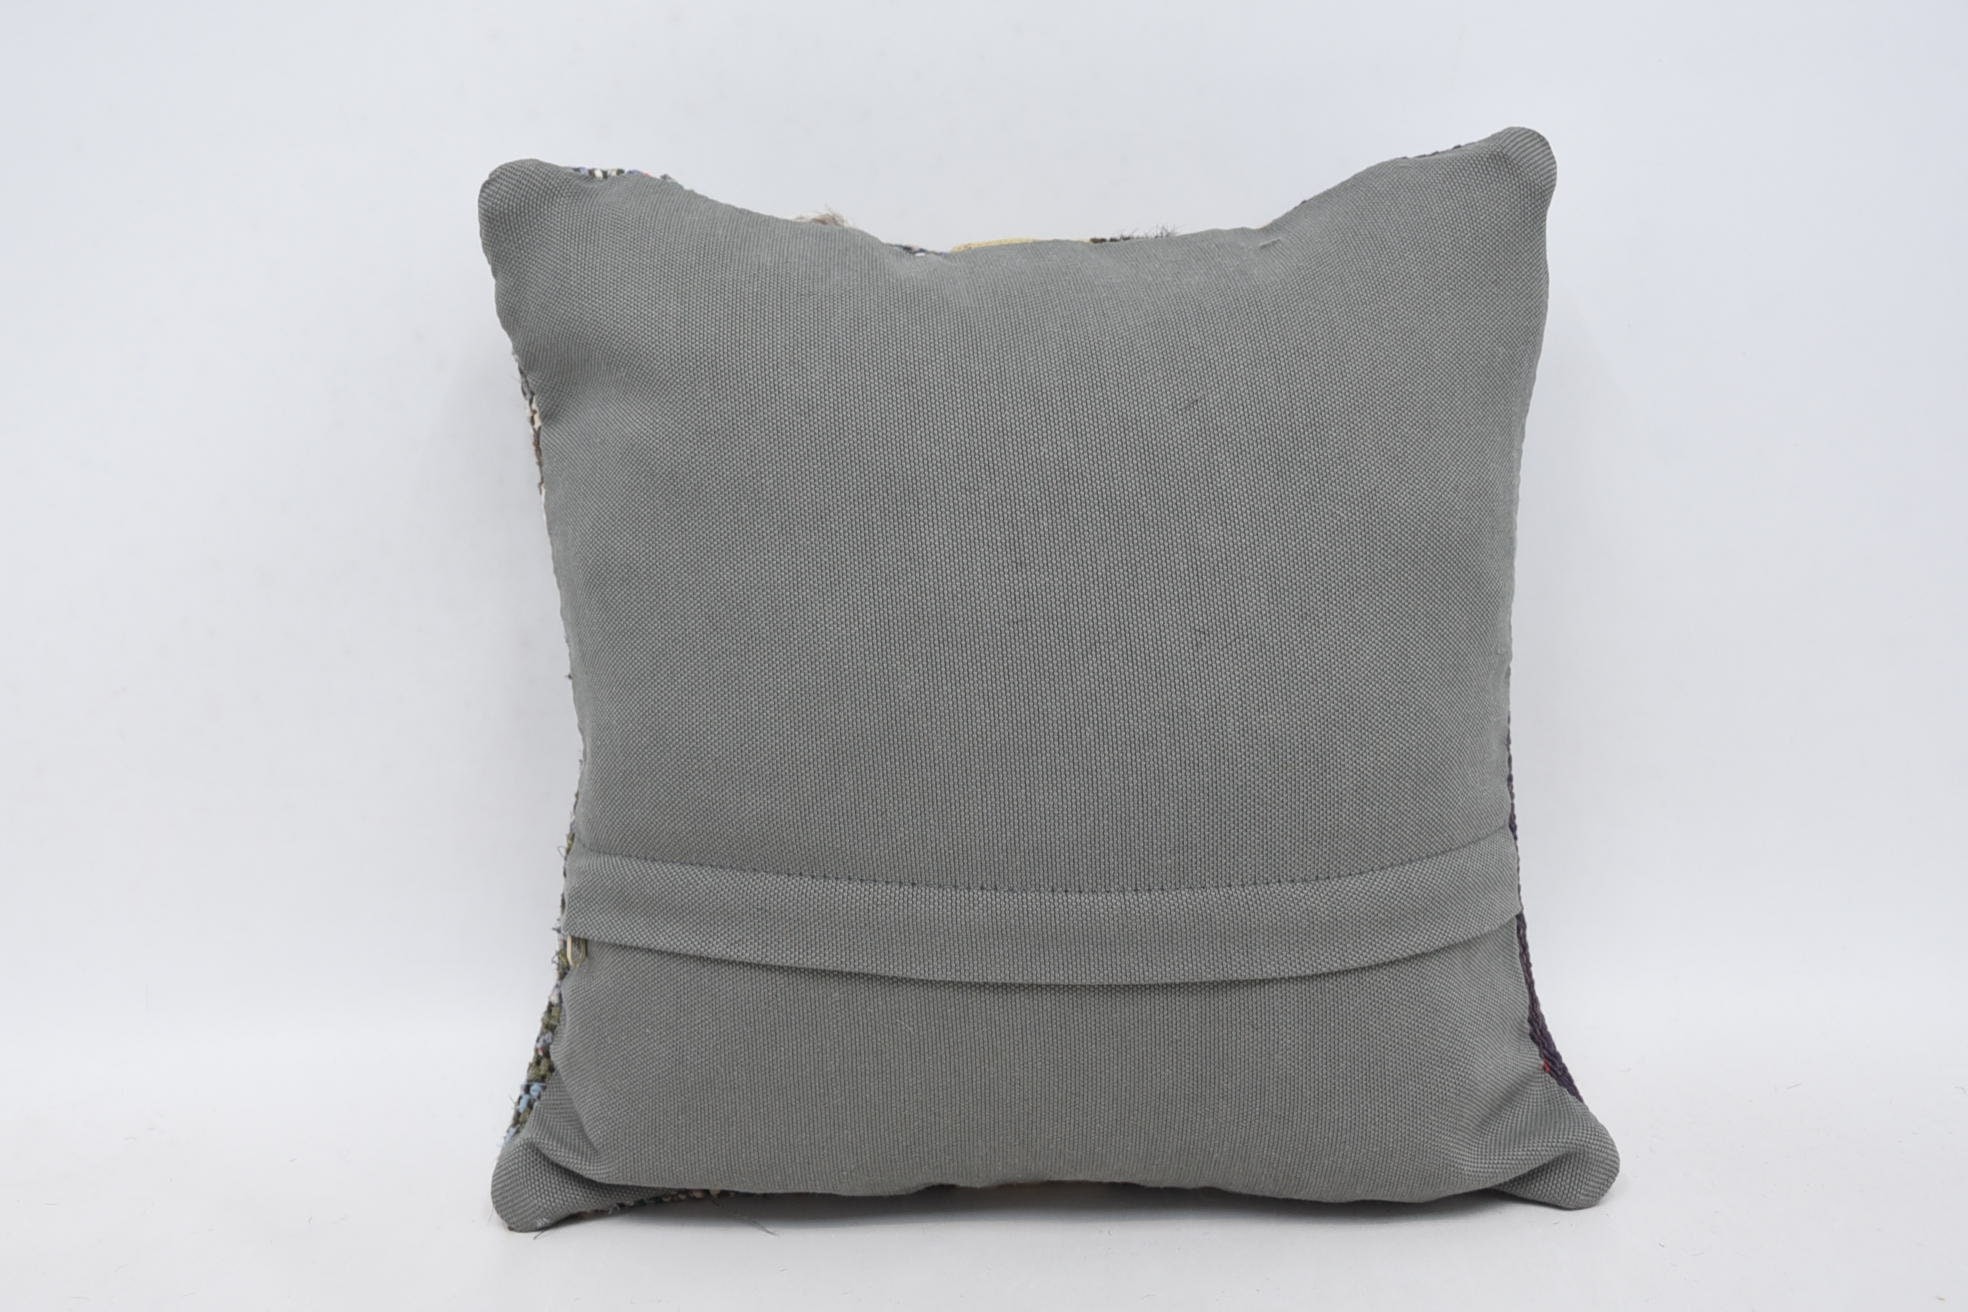 Vintage Pillow, 14"x14" Beige Pillow Sham, Bed Cushion, Turkish Kilim Pillow, Throw Kilim Pillow, Turkish Bench Pillow Cover